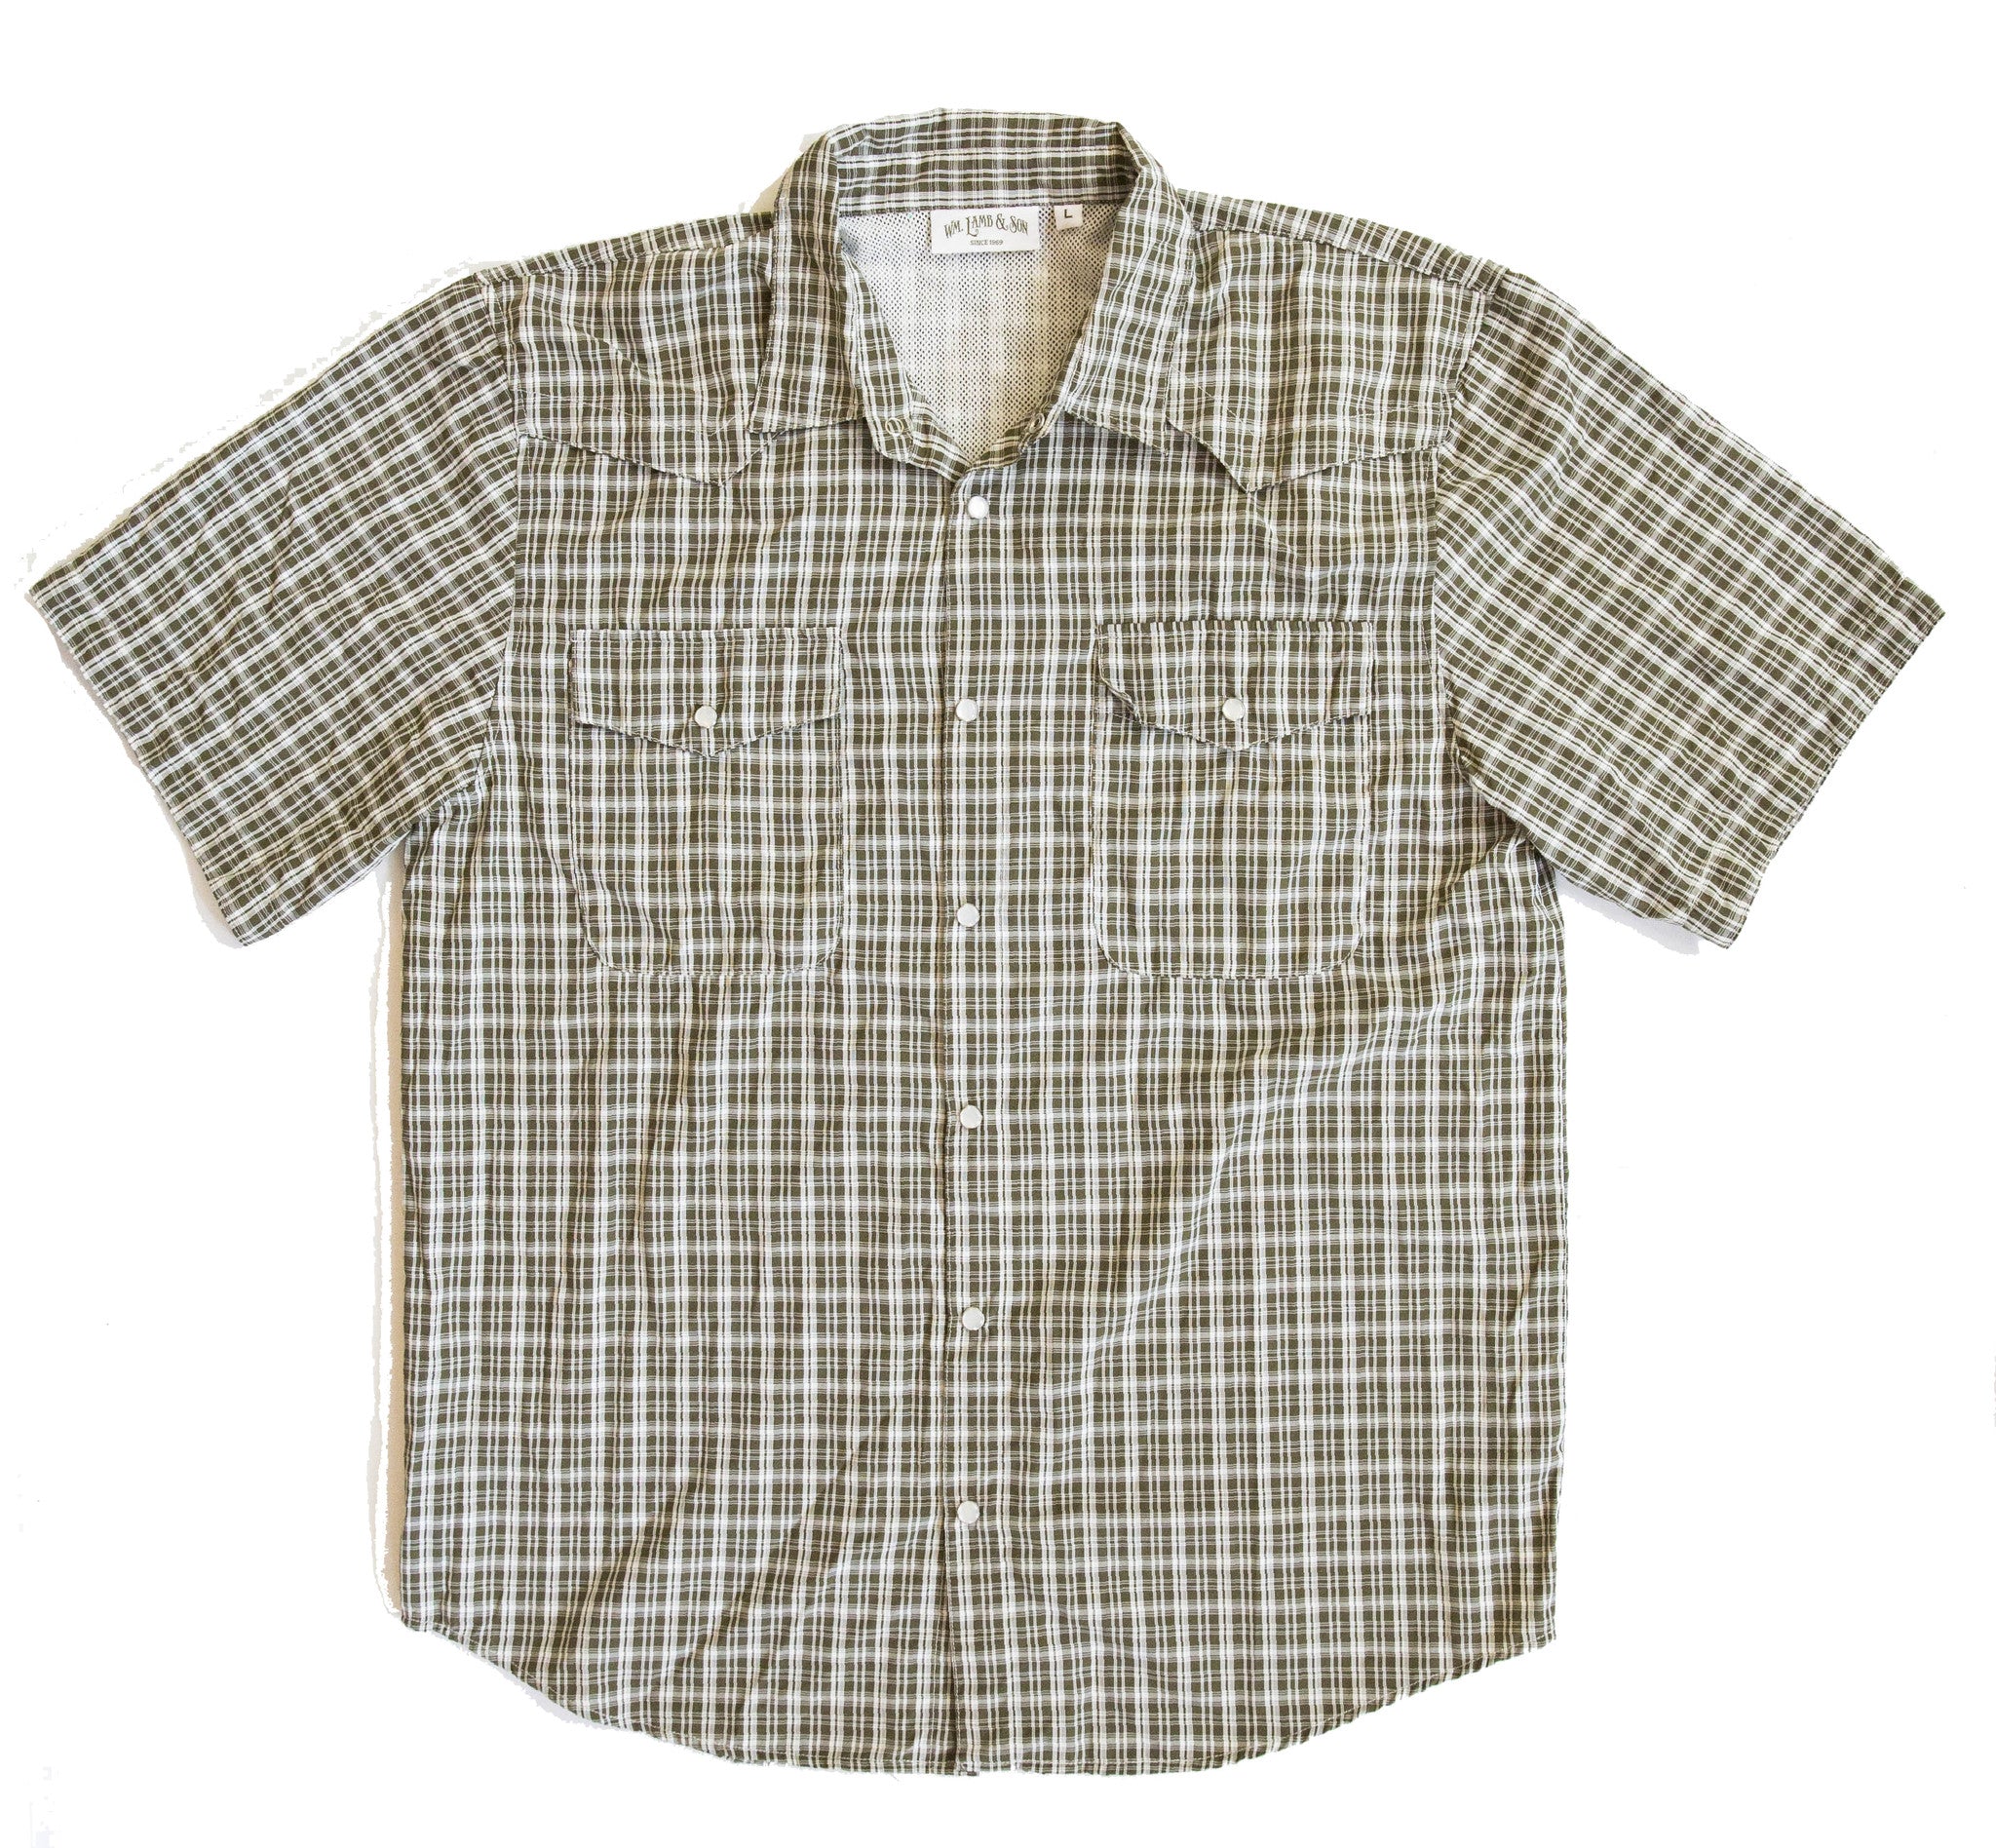 Cache Creek Fishing Shirt - Spruce Plaid Short Sleeve – Wm Lamb & Son